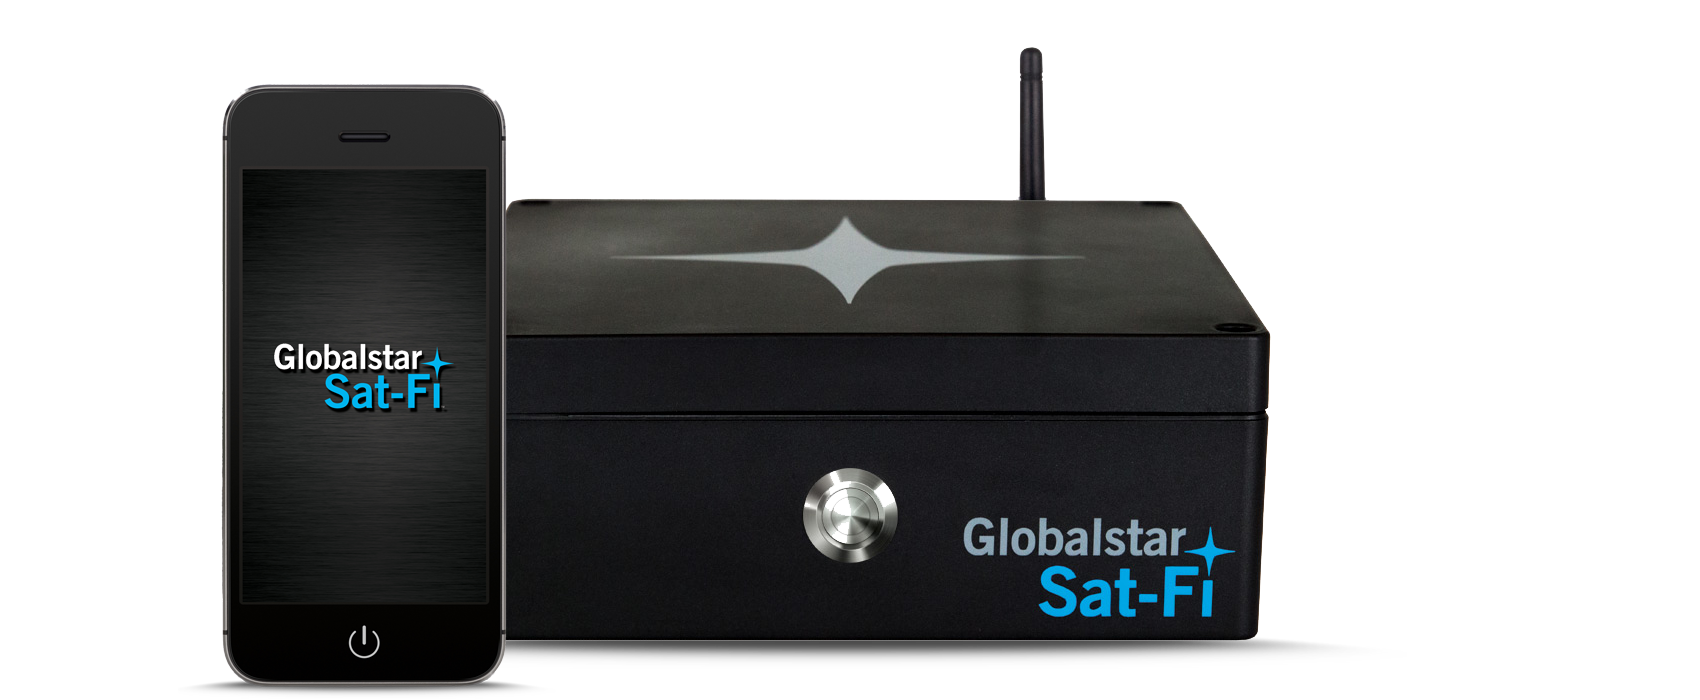 Globalstar Sat-Fi satellite hotspot with smartphone App